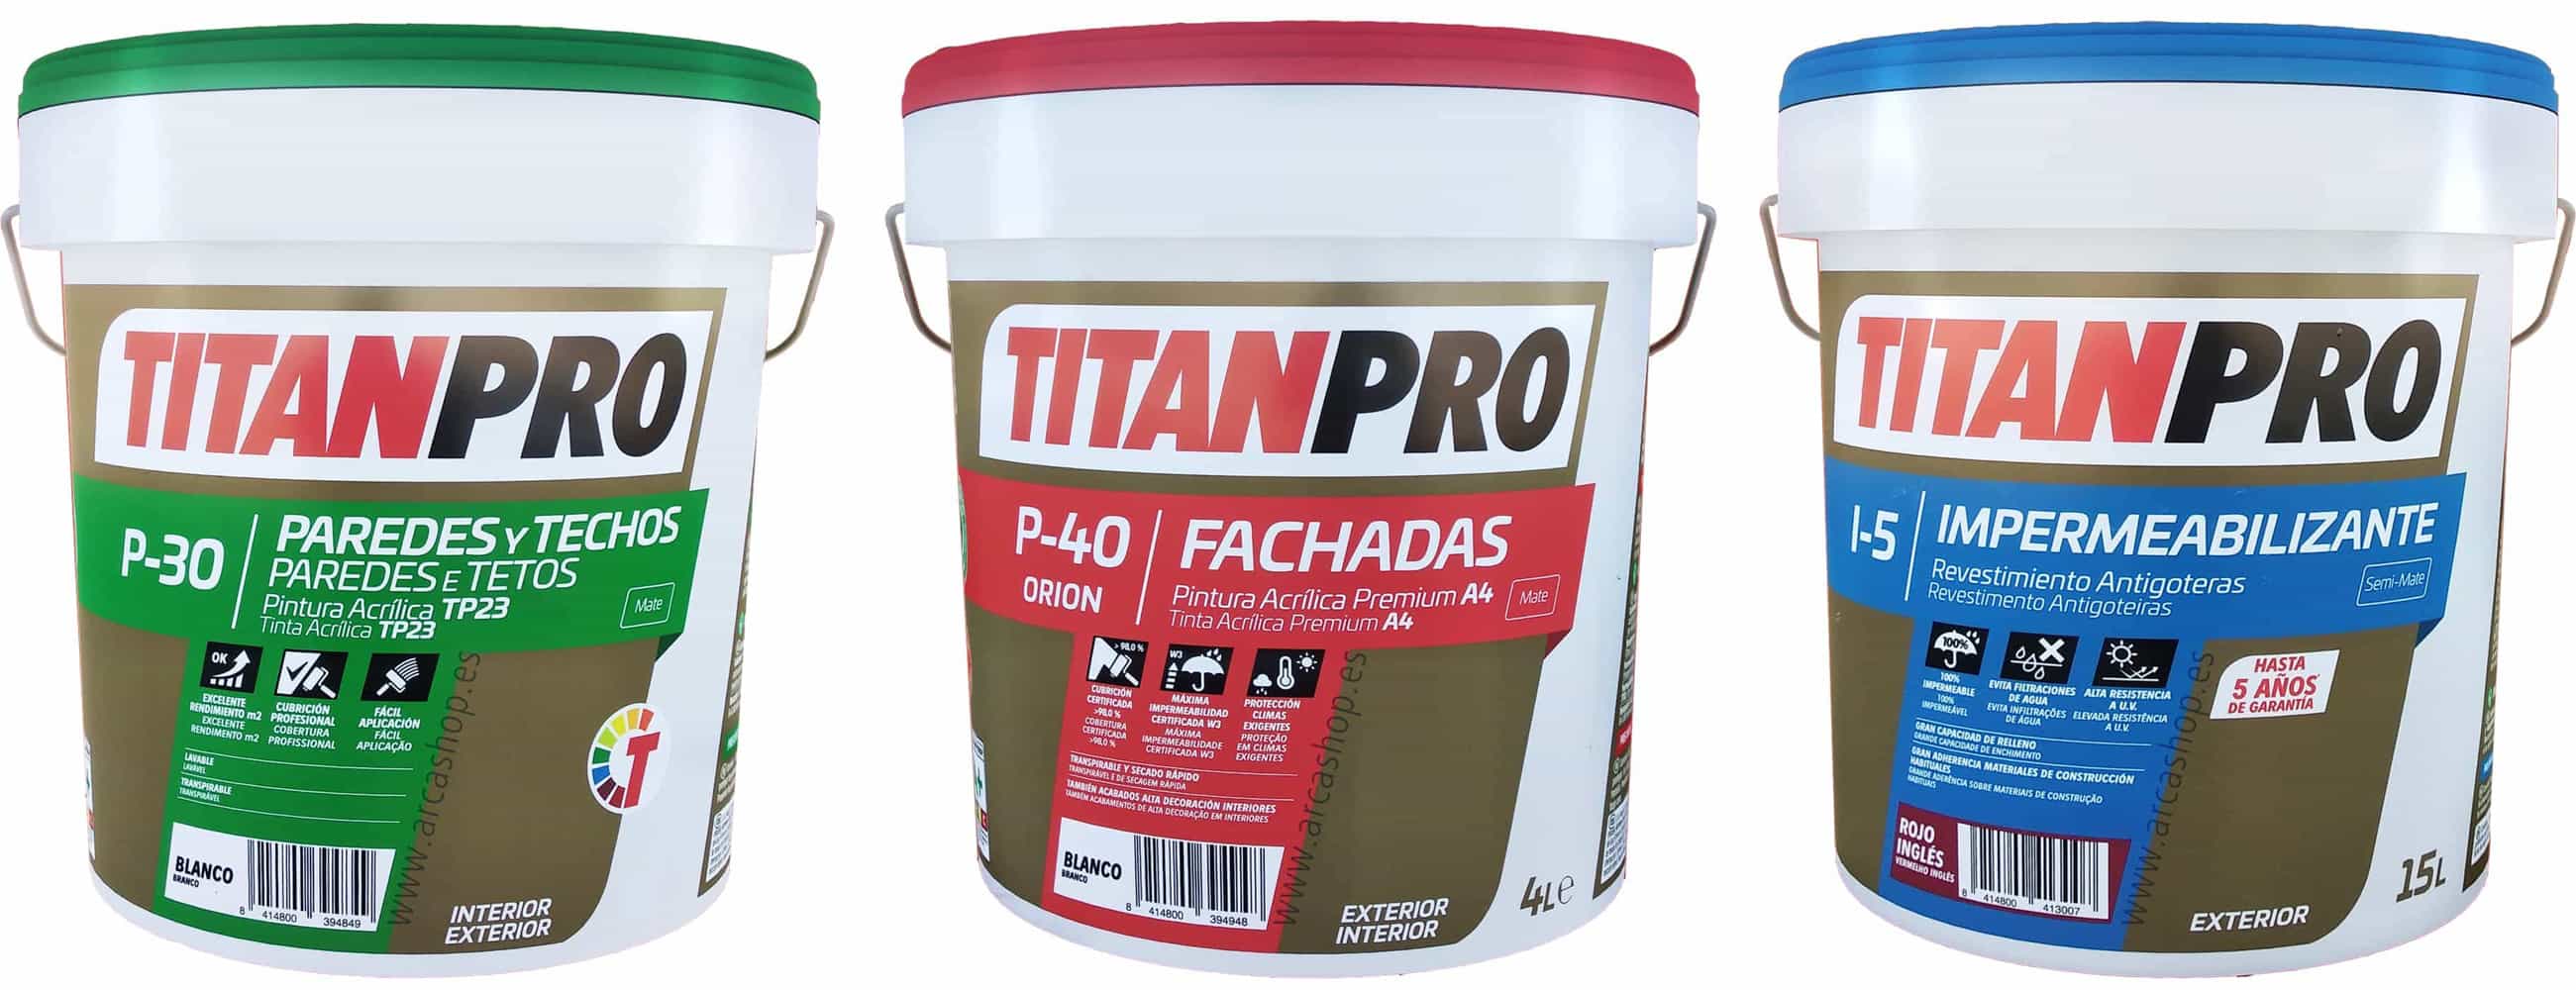 Titanpro Serie Profesional Pinturas Titanlux: Titanpro P40 Orion A4 Titanpro P30 Pintura acrílica TP23 paredes y techos; Titanpro P-500 Plus Premium y Titanpro I50 Impermeabilizante Antigoteras.